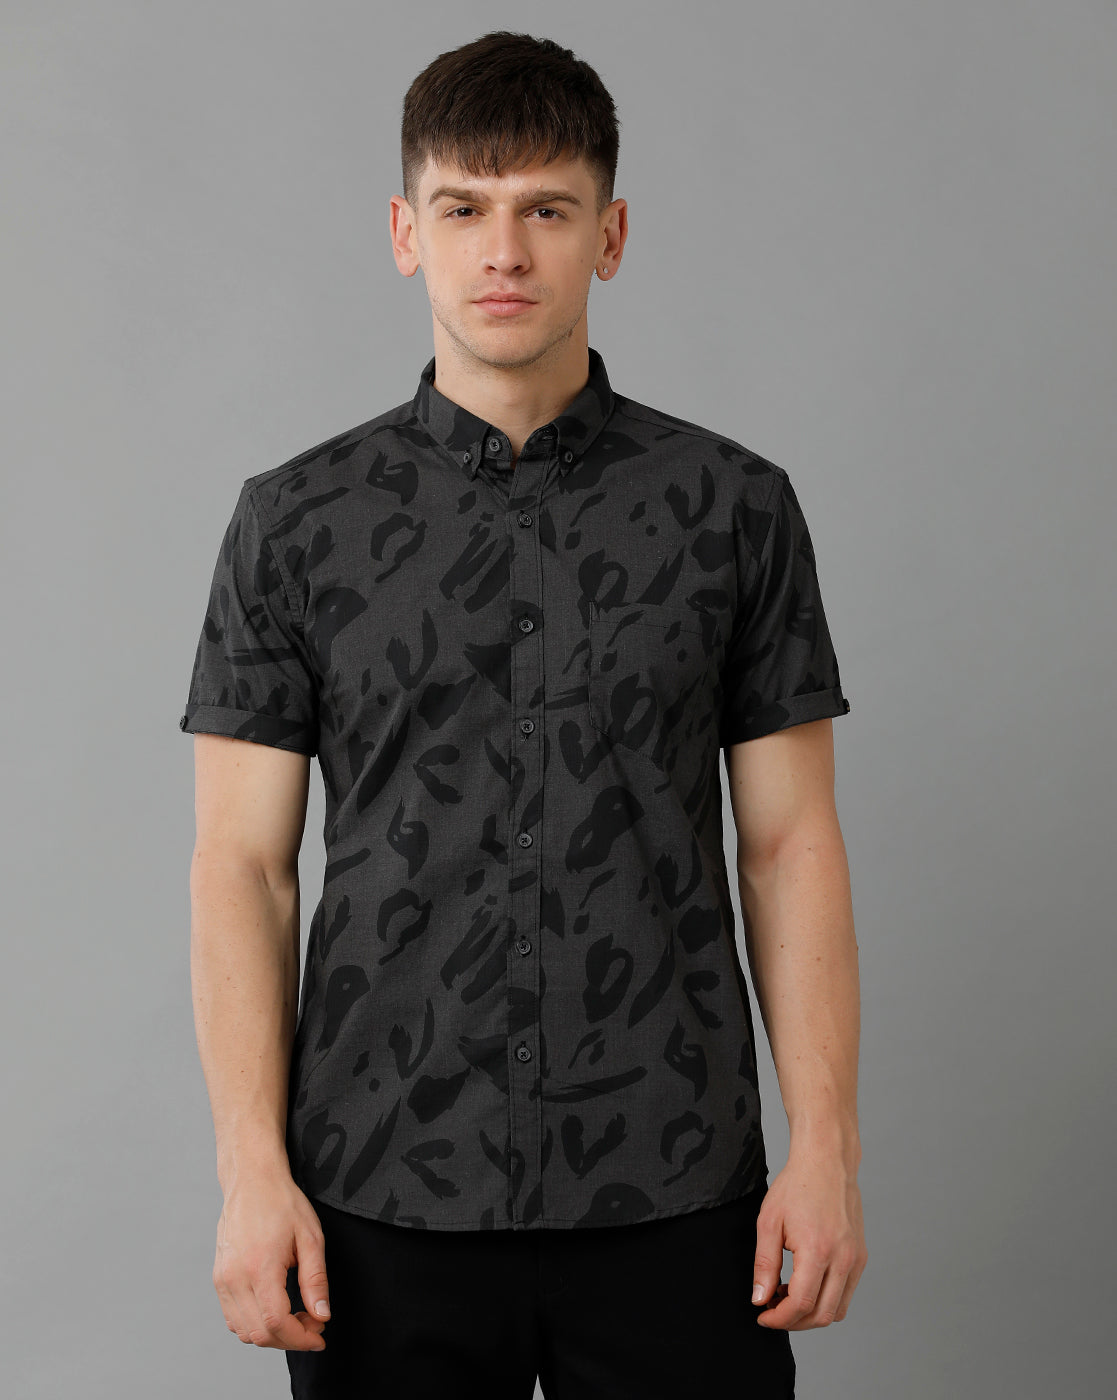 Custom printed button down shirts